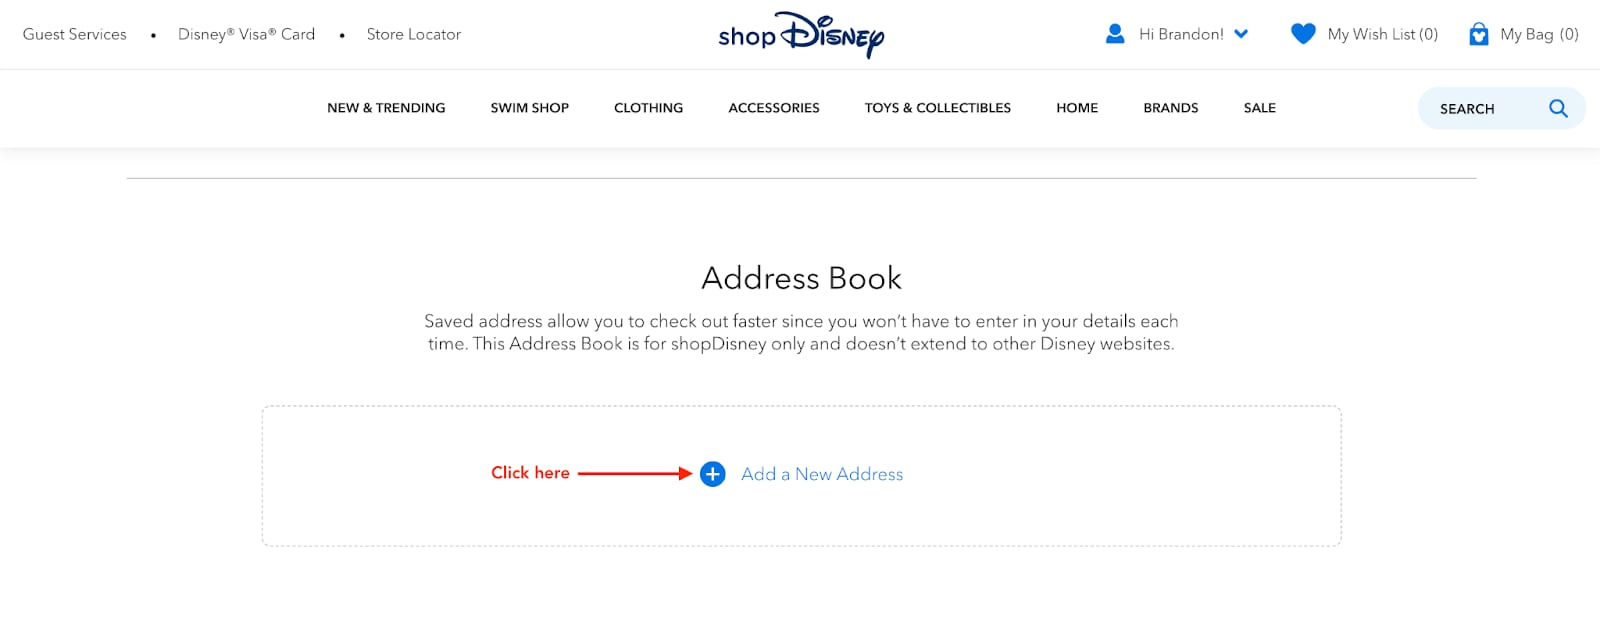 How to Ship Disney Internationally in 3 Easy Steps 2